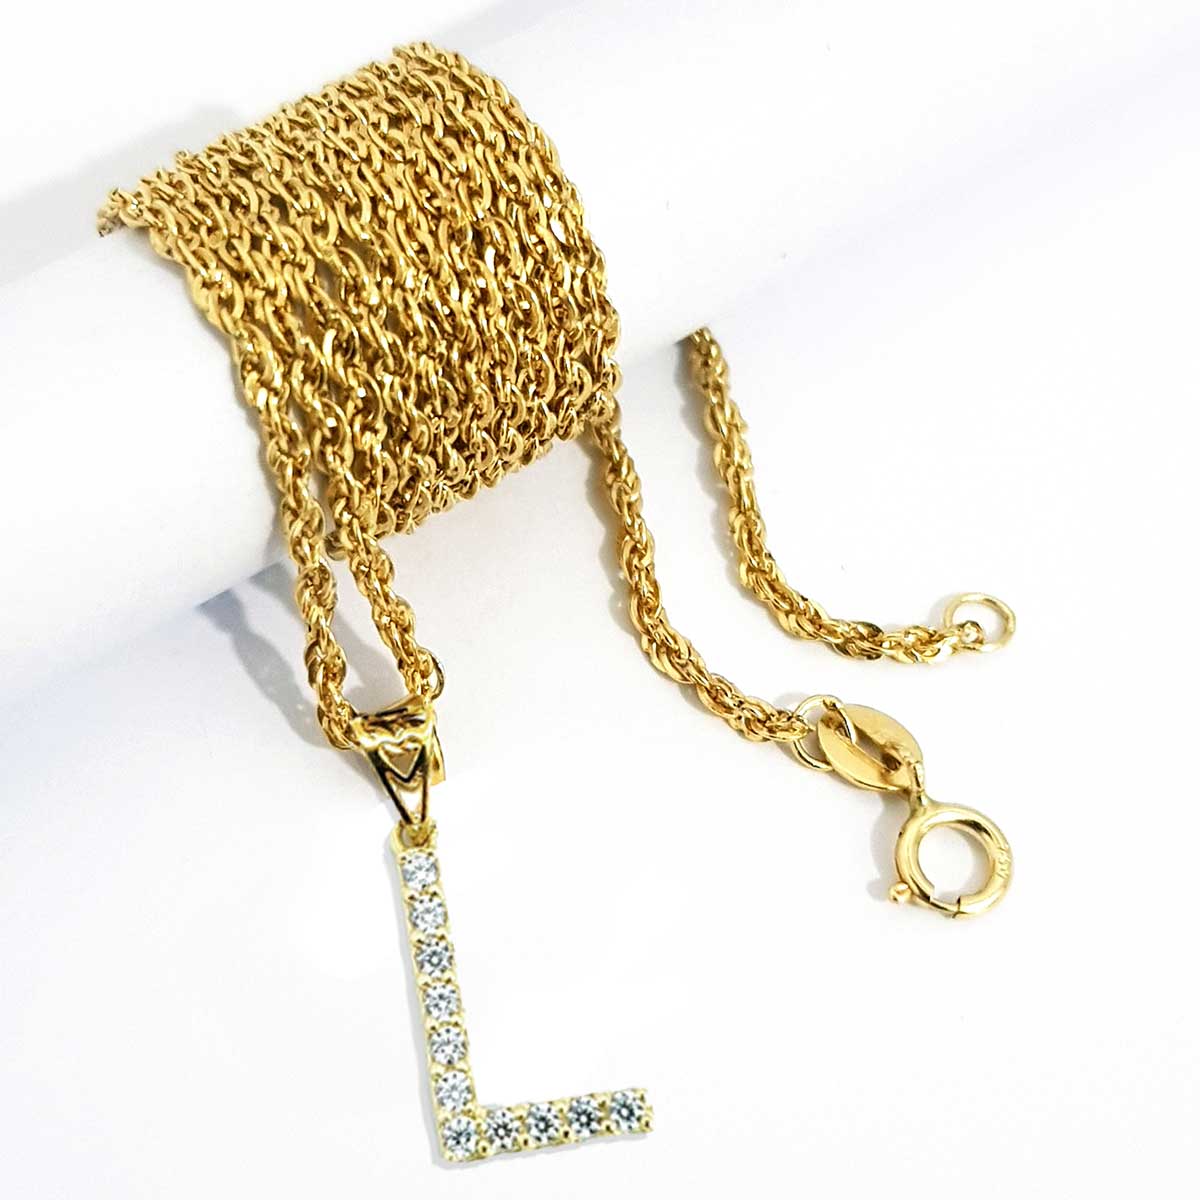 18K Pure Gold Letter L Design w/ Zircon Stone Necklace